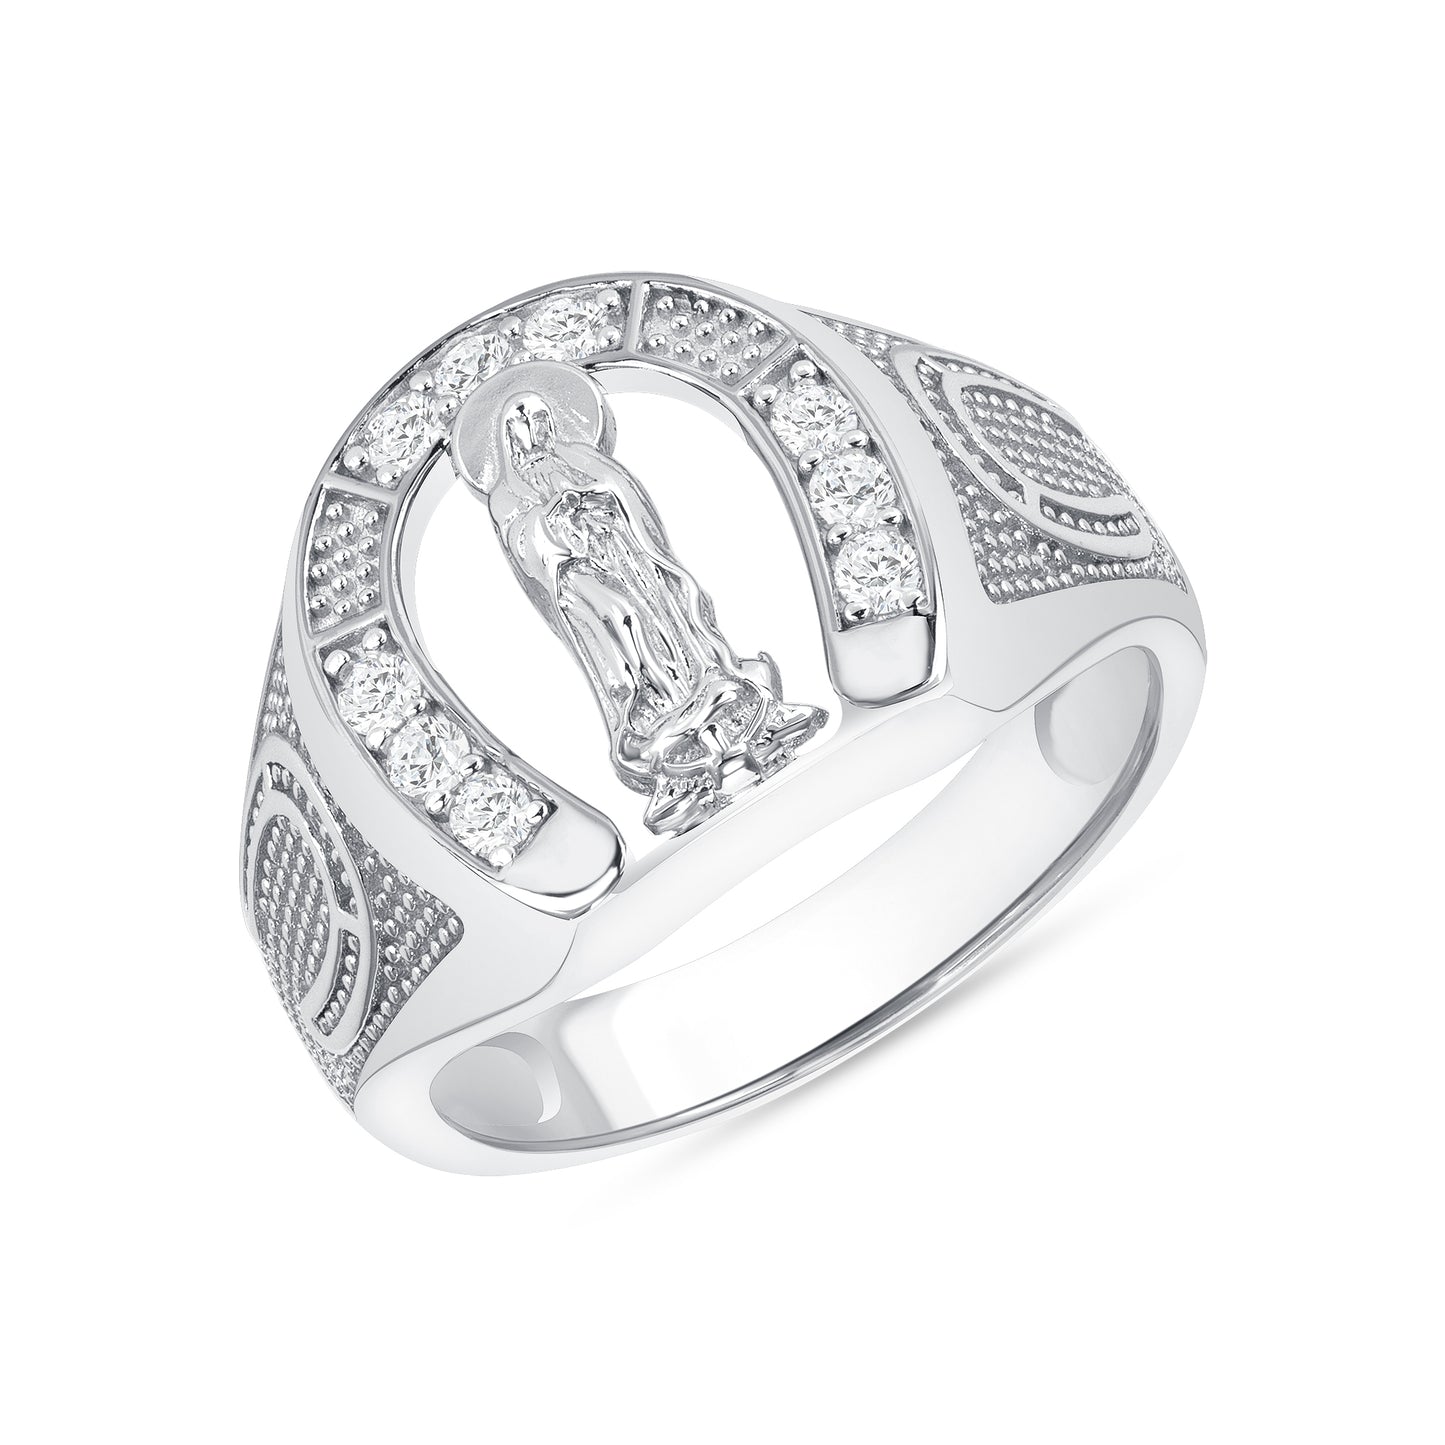 Silver 925 Virgin Mary Horseshoe Clear Cubic Zirconia Men's Ring. JHVM02